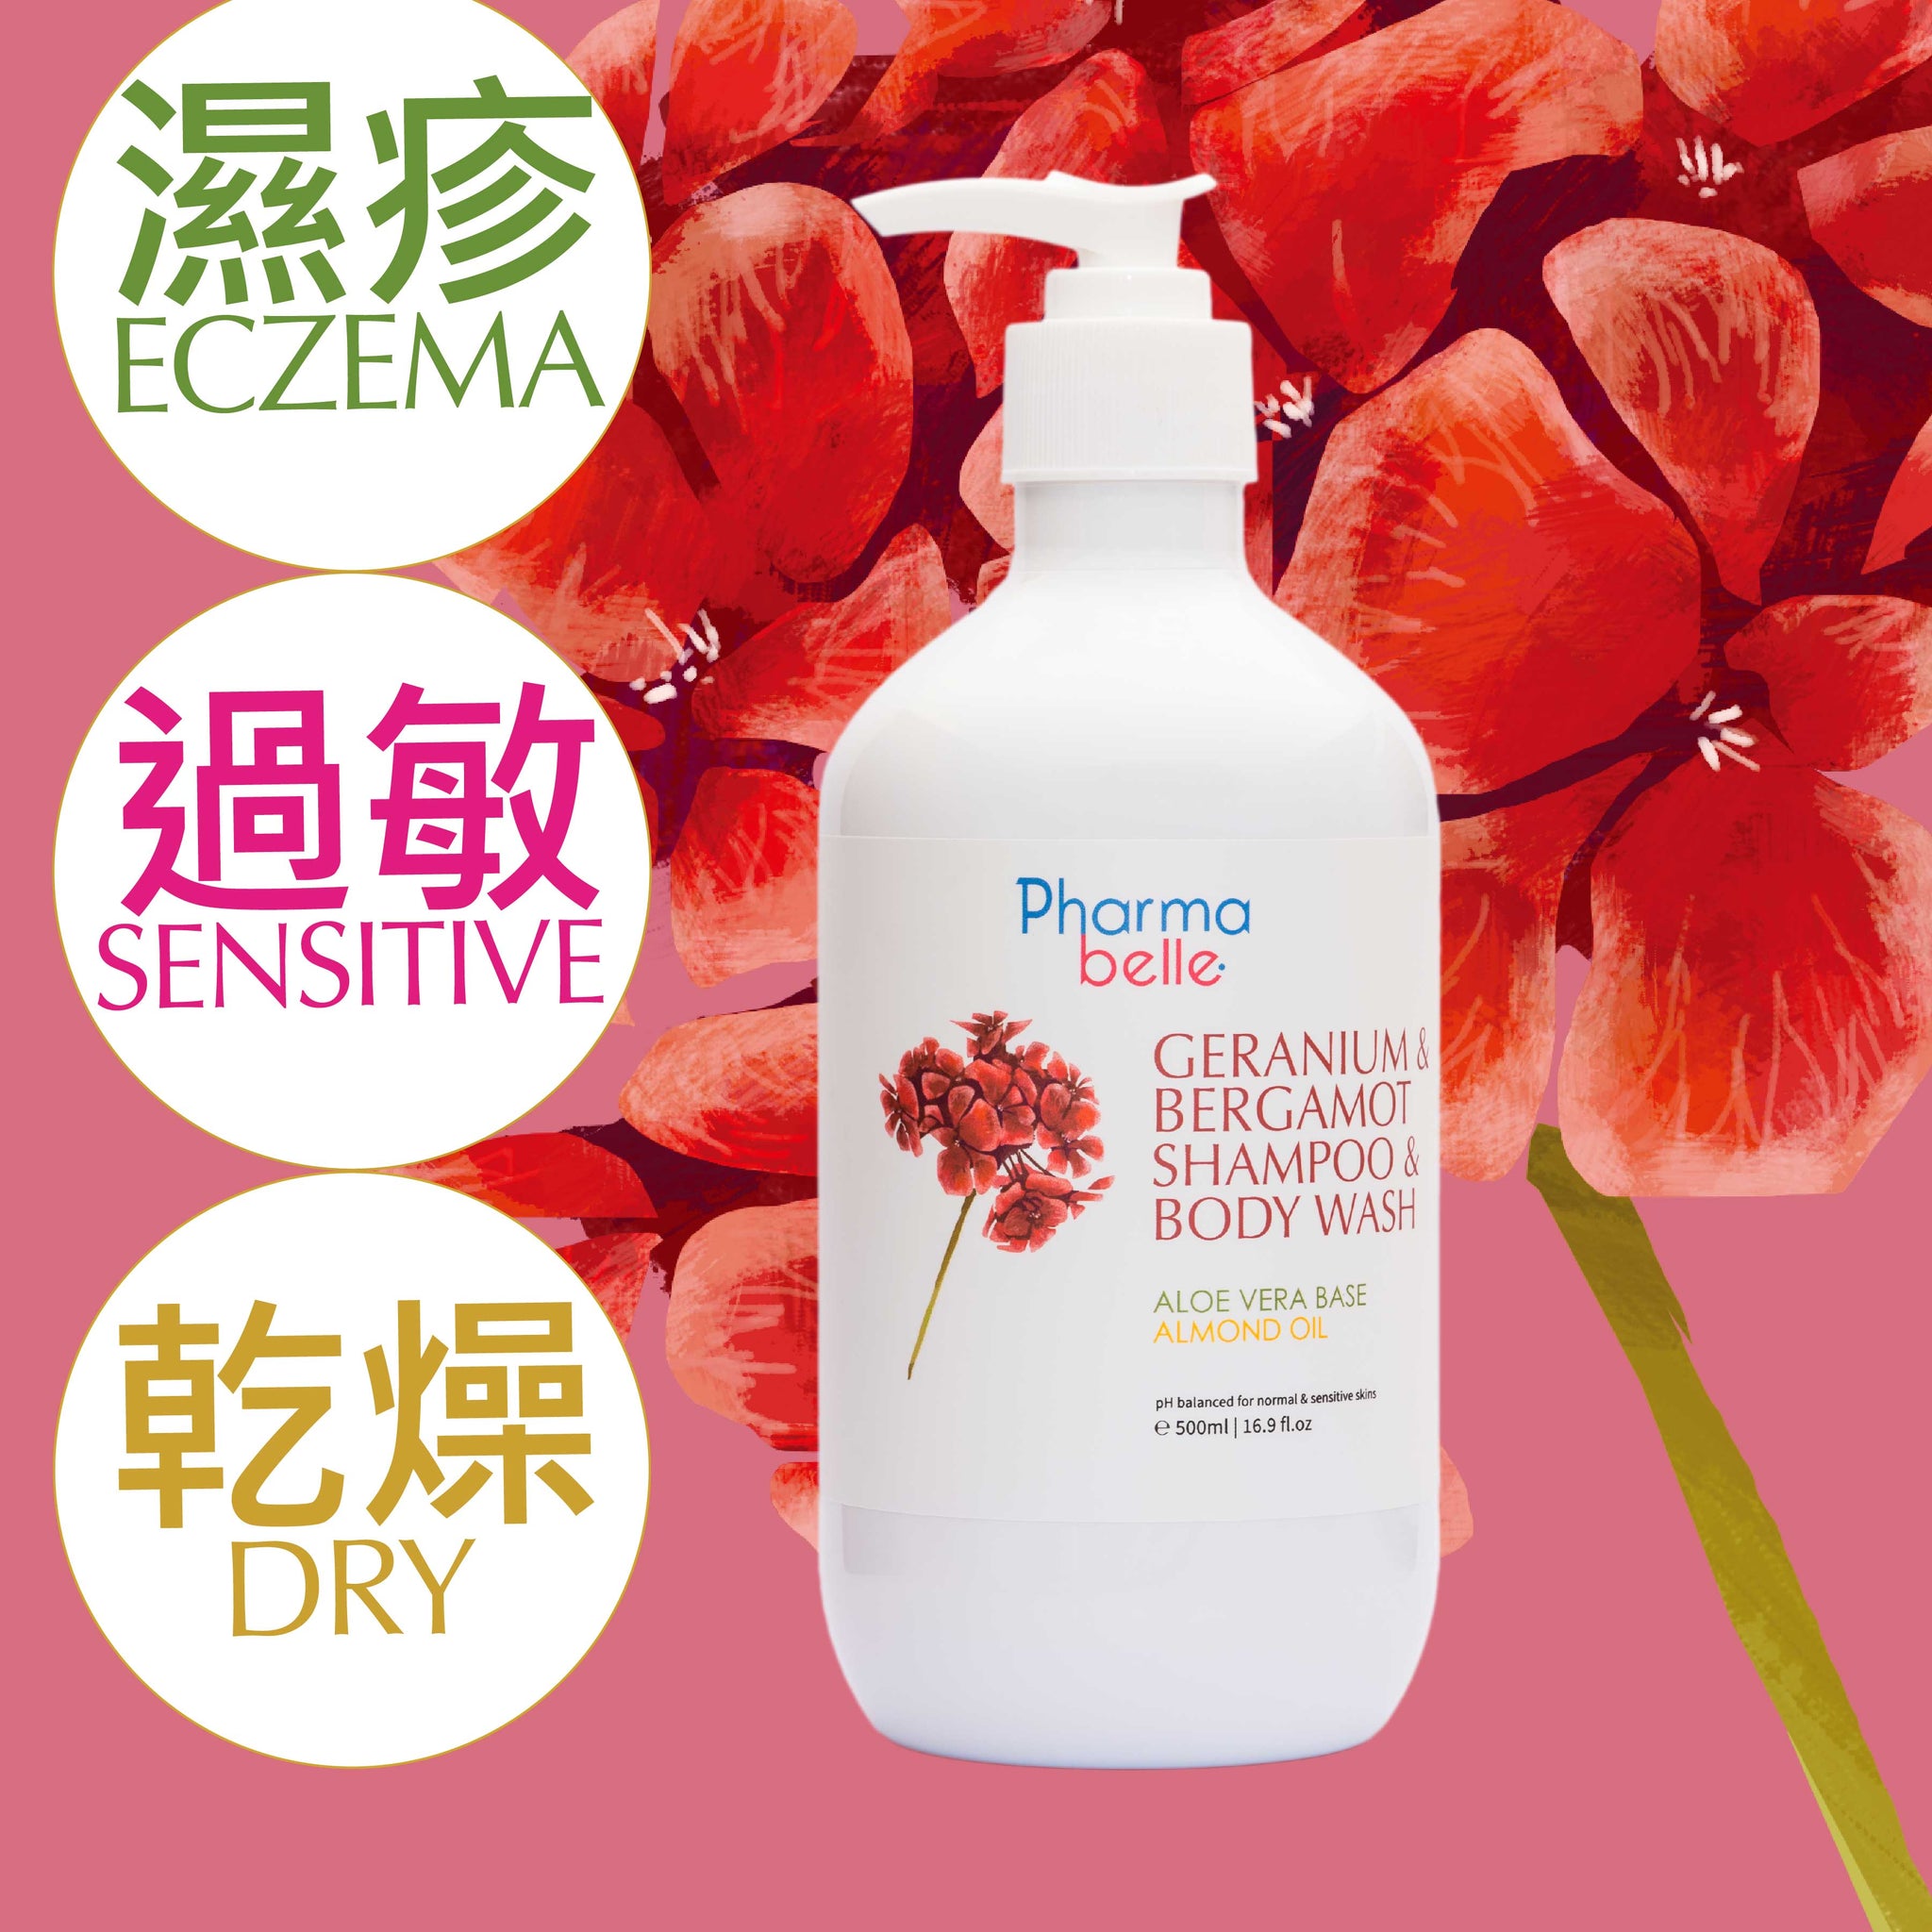 Geranium & Bergamot (aloe base) Body Wash - eczema, sensitive & dry skins